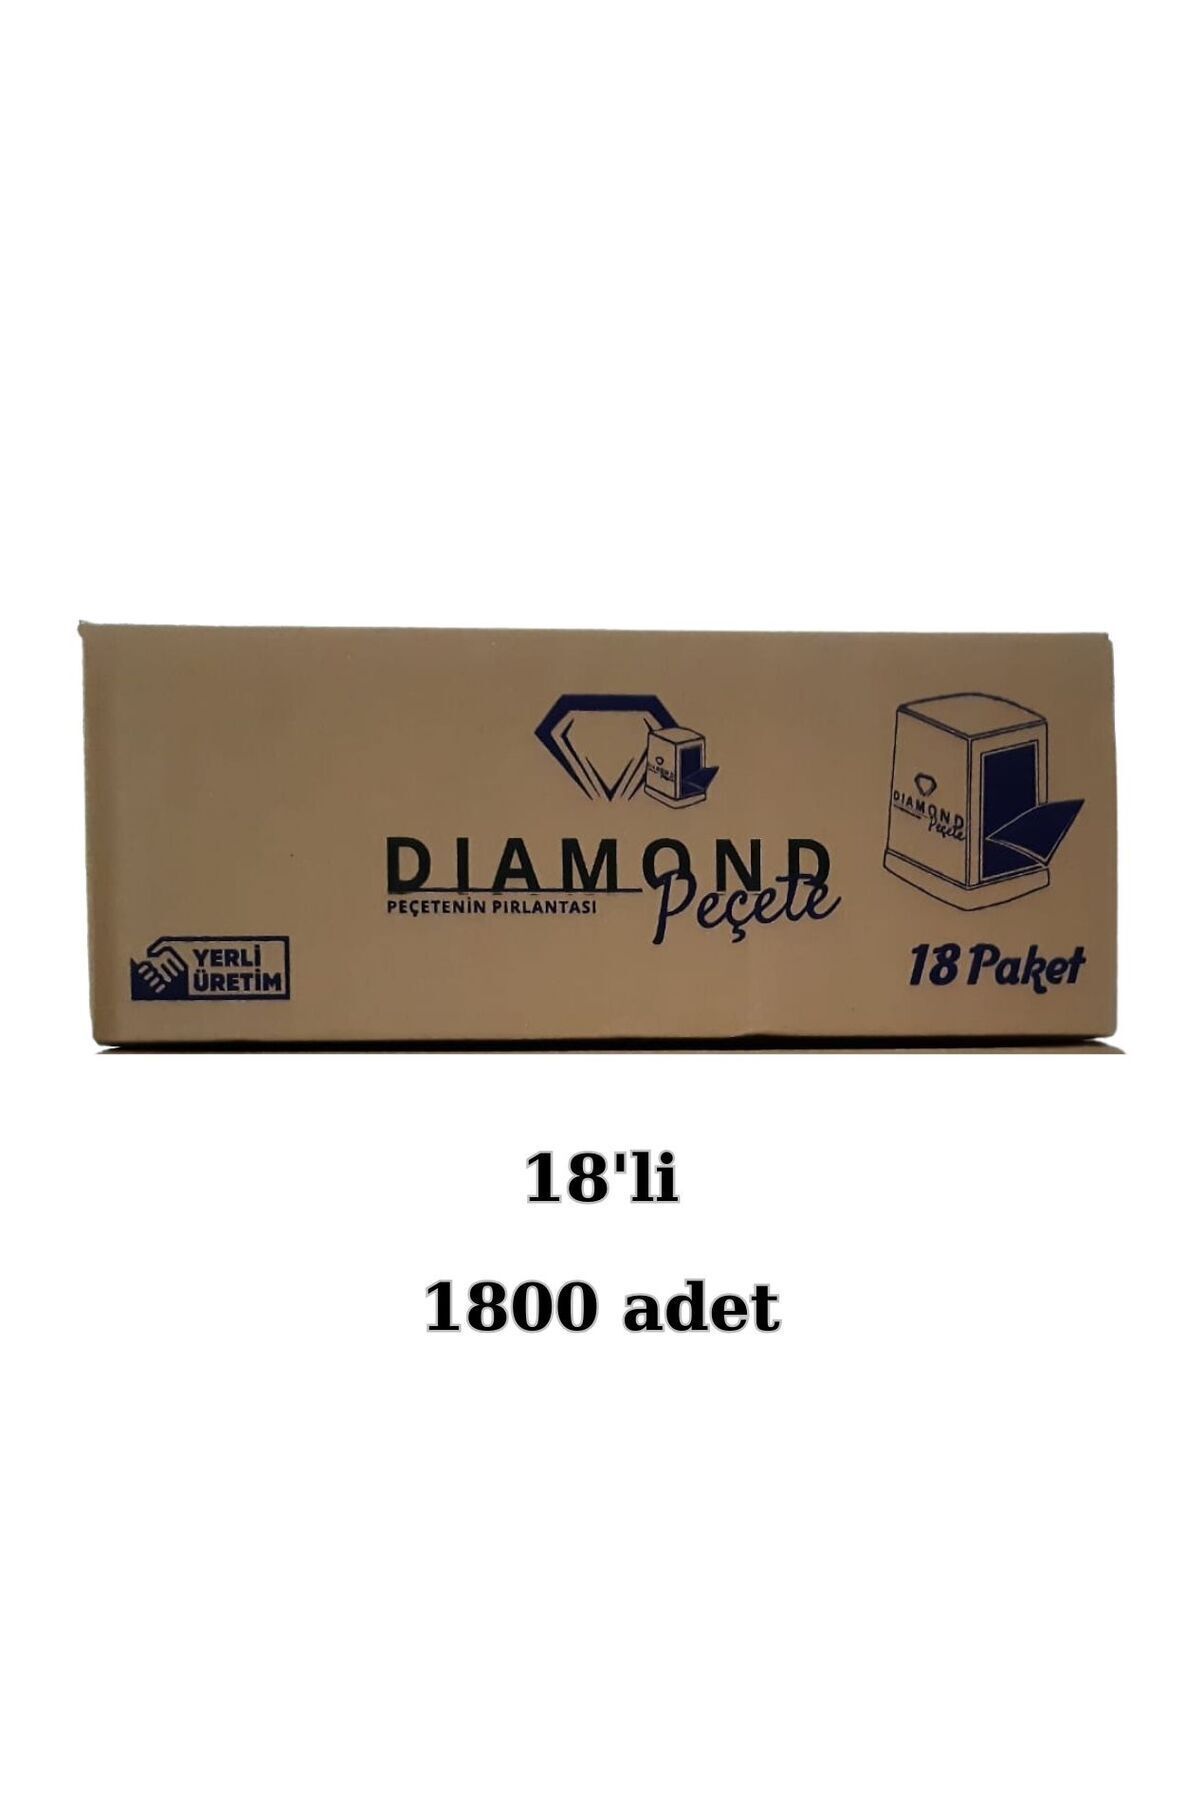 DIAMOND Dispanser Peçete 18li Paket/1800 Adet